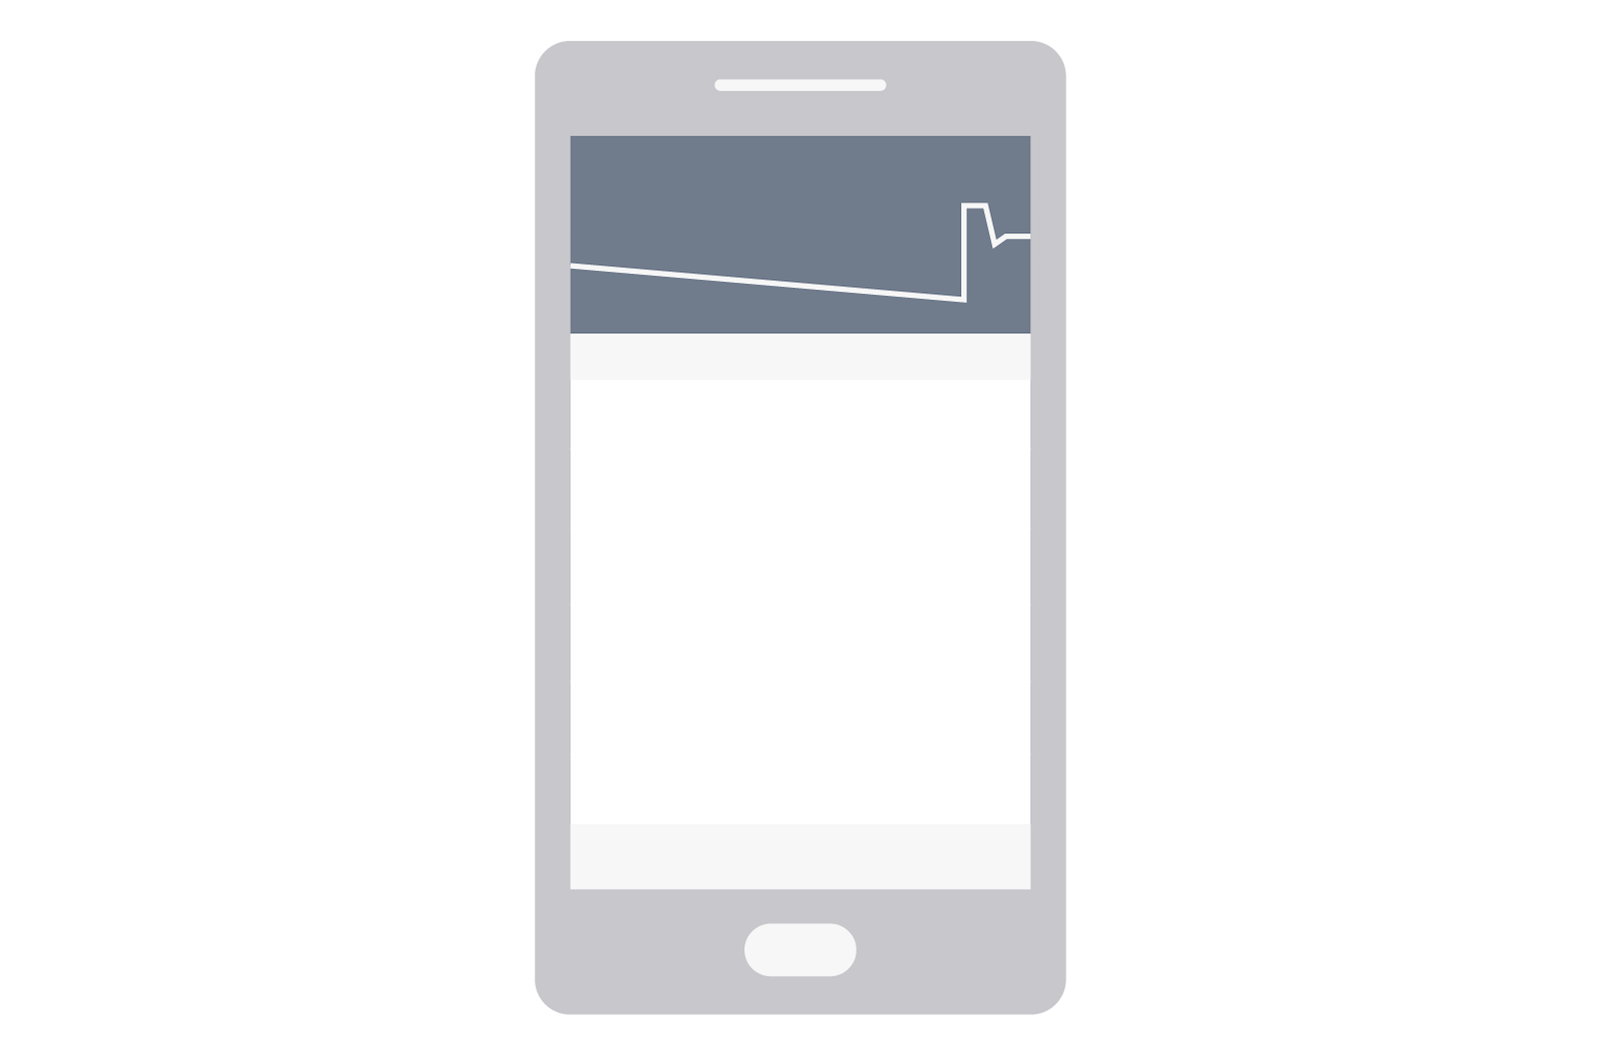 Illustration of the Monzo app